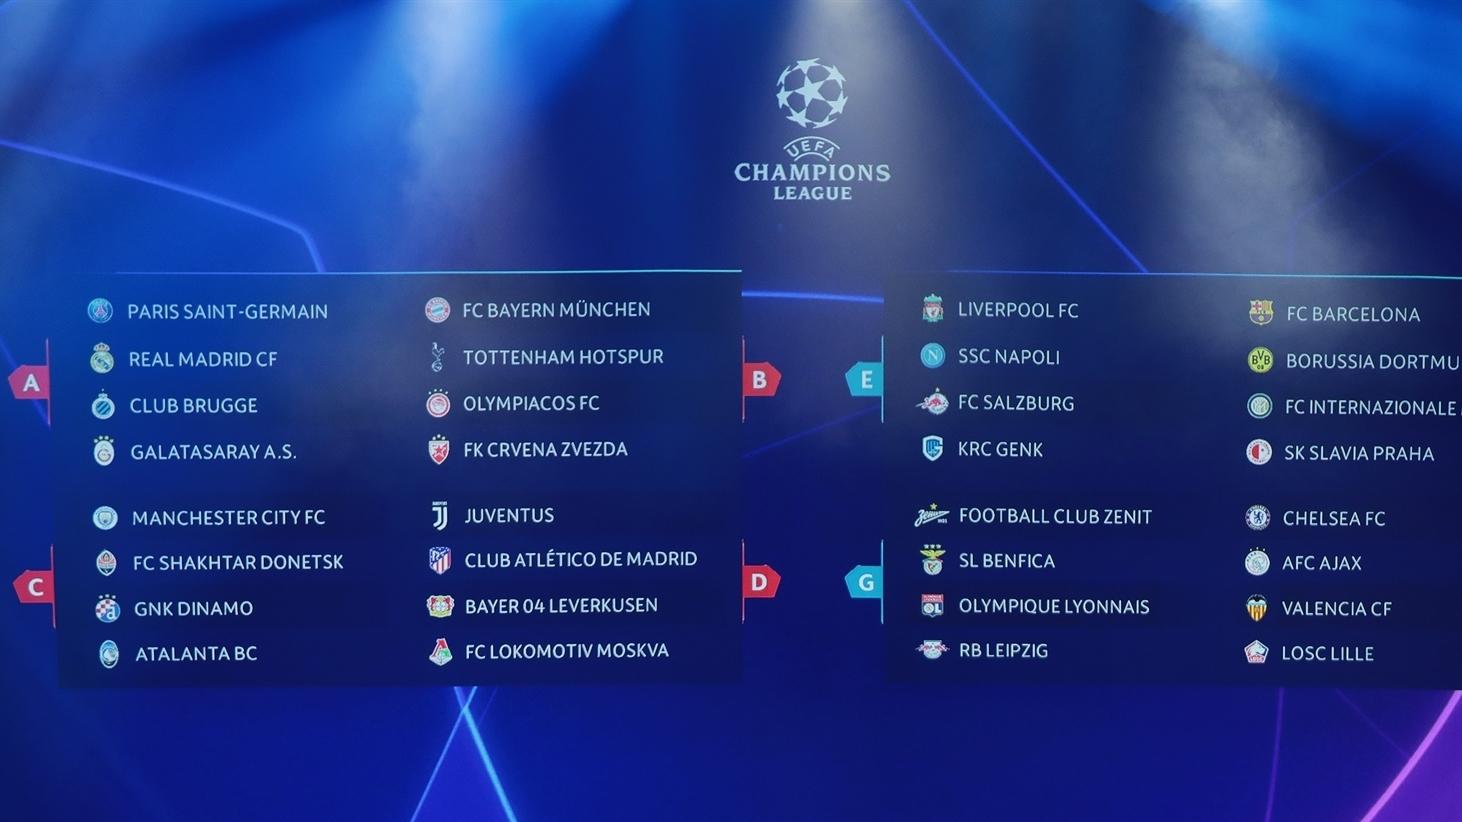 afc champions league table